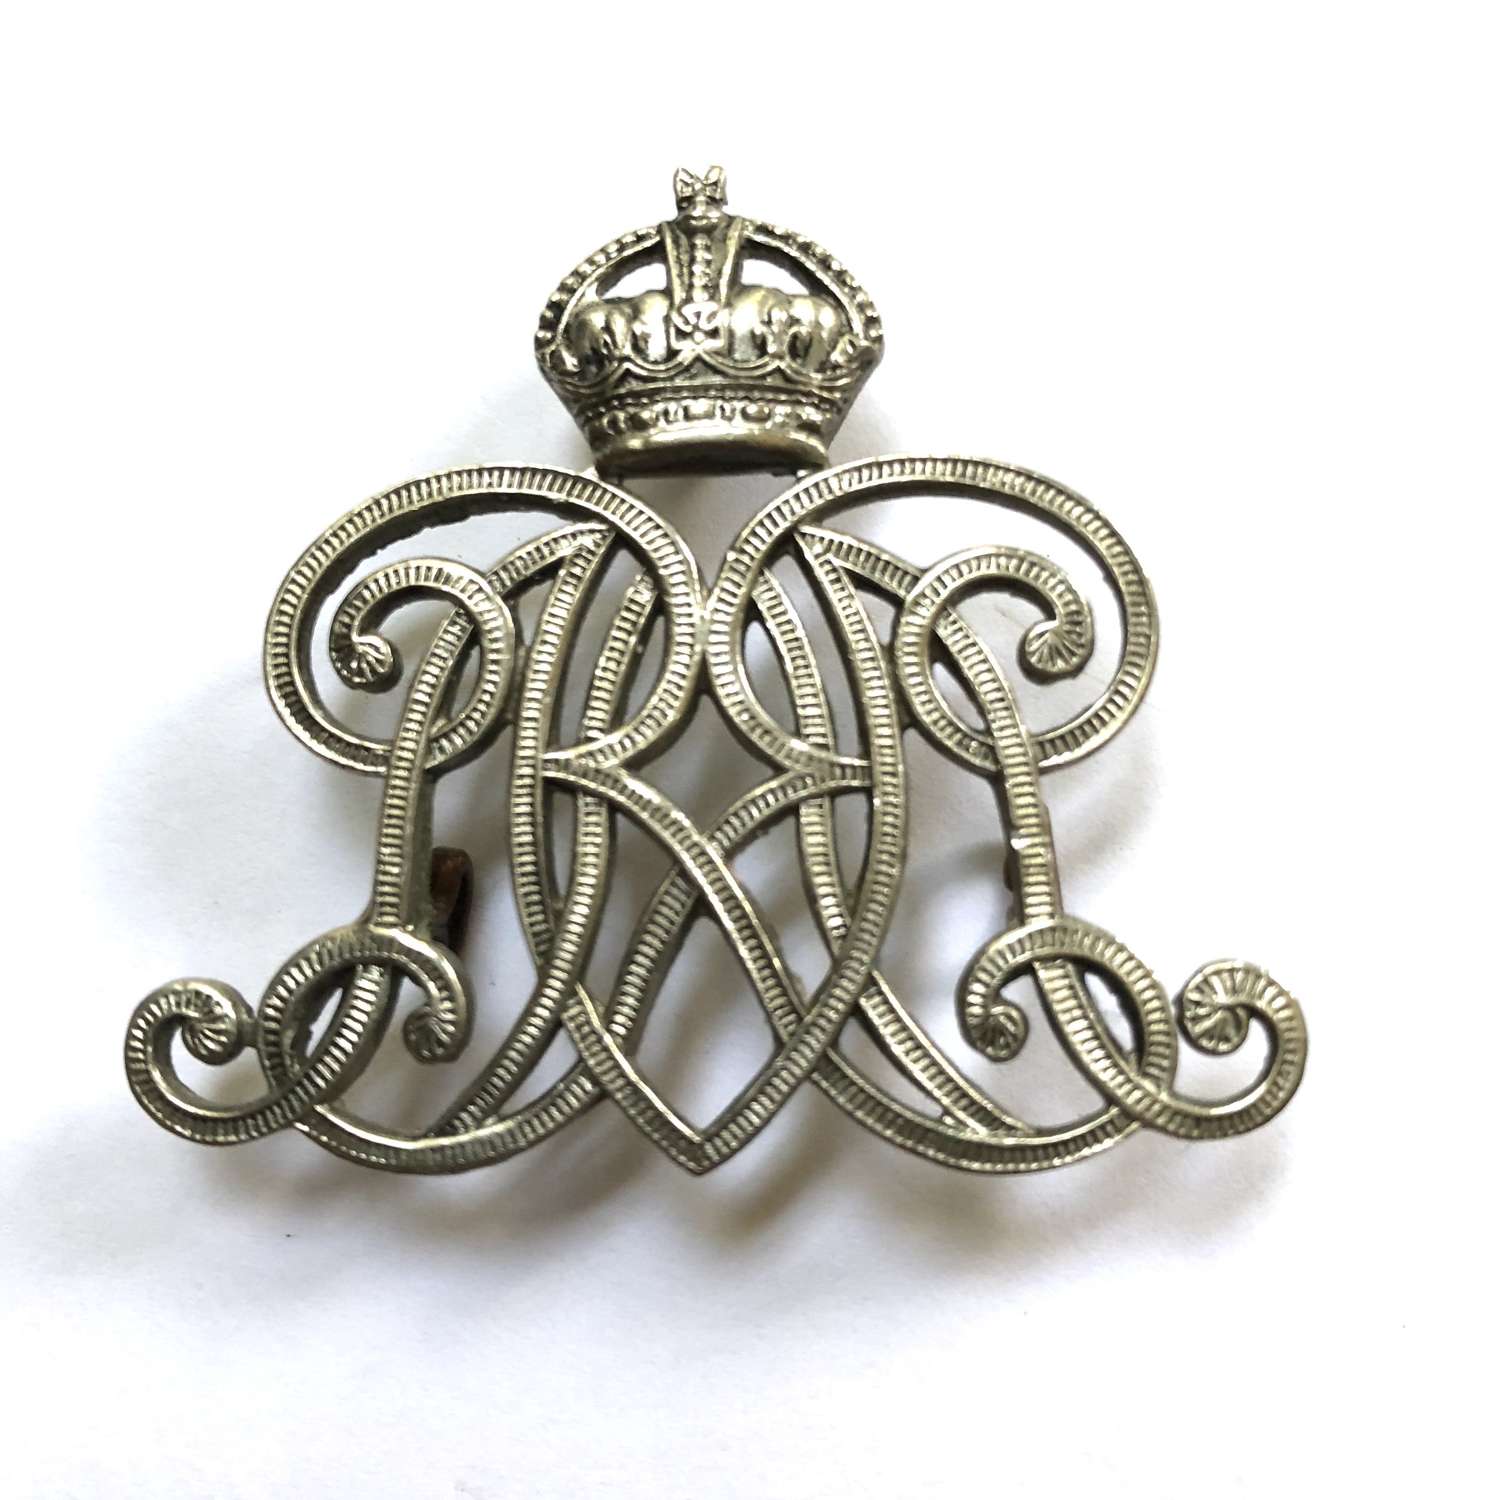 9th Queen's Royal Lancers NCO's white metal arm badge circa 1901-52